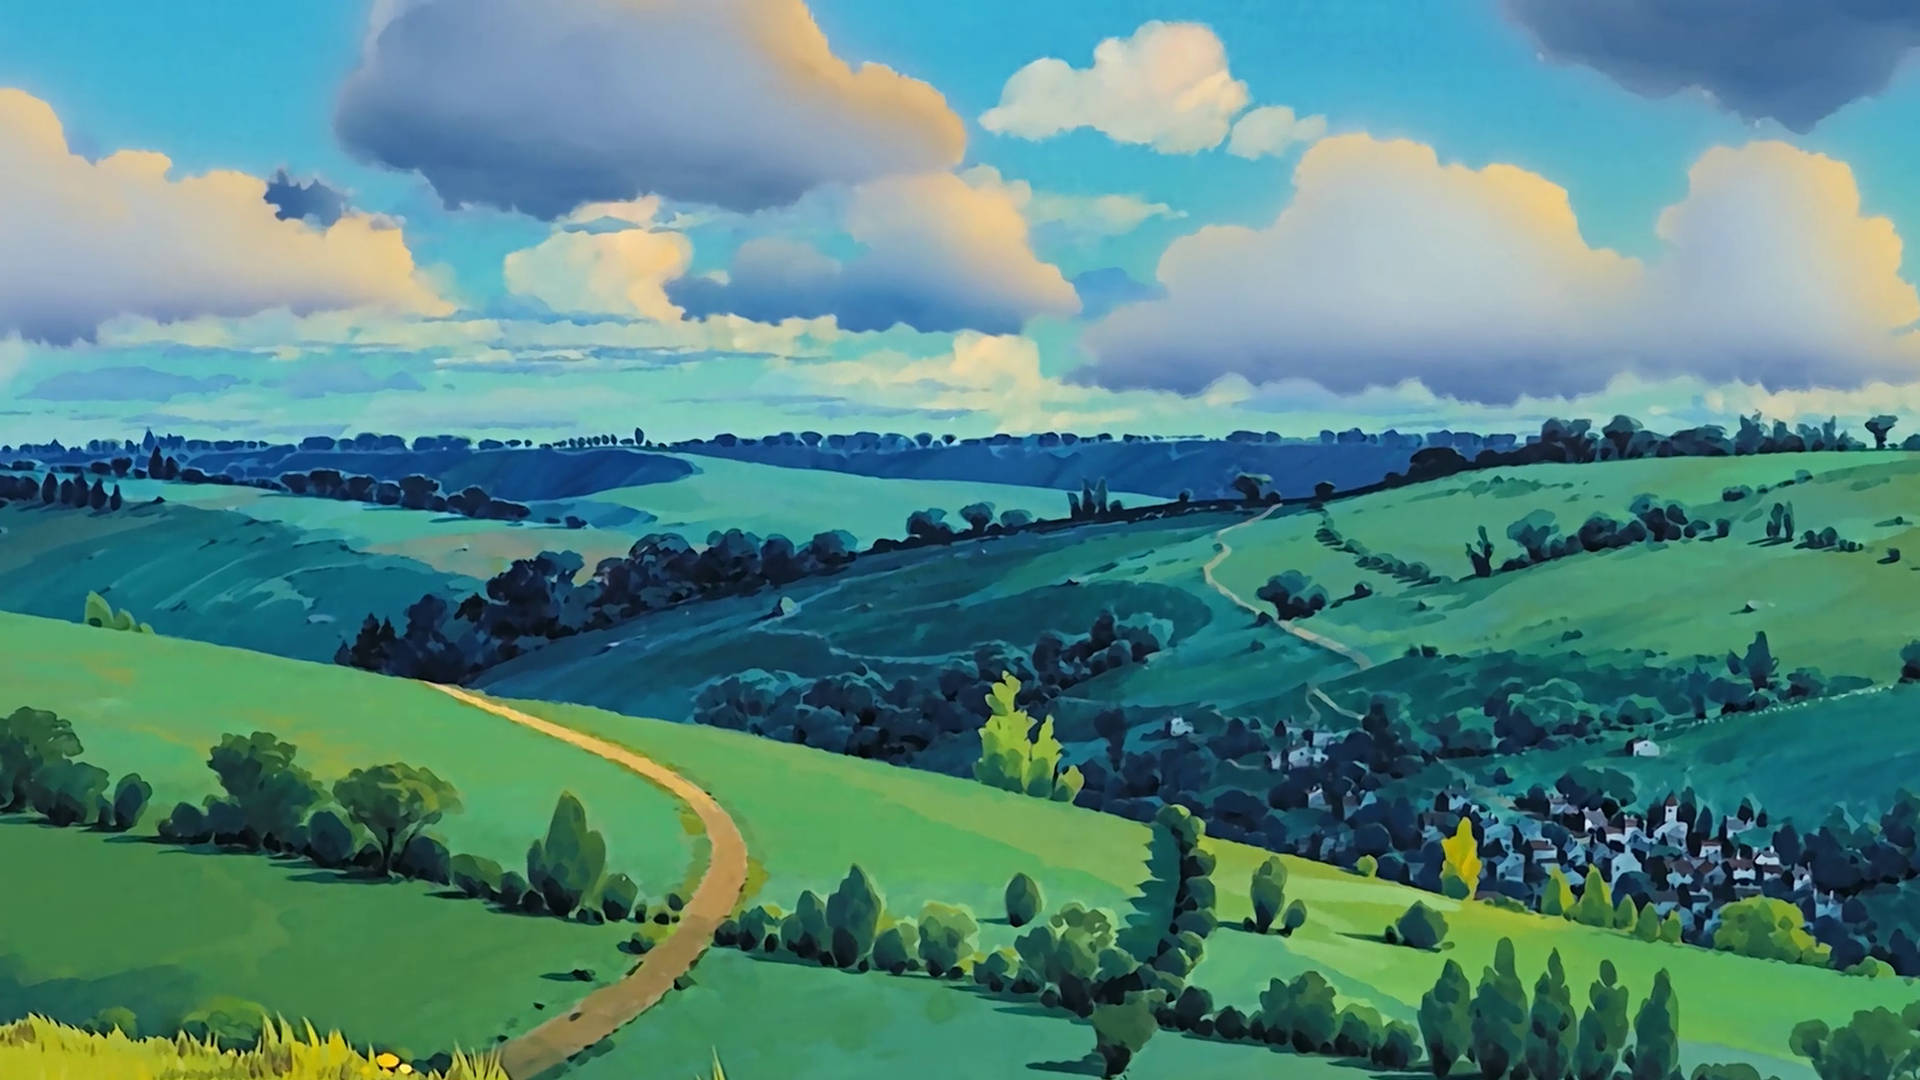 Cloudy Studio Ghibli Scenery Over Fields